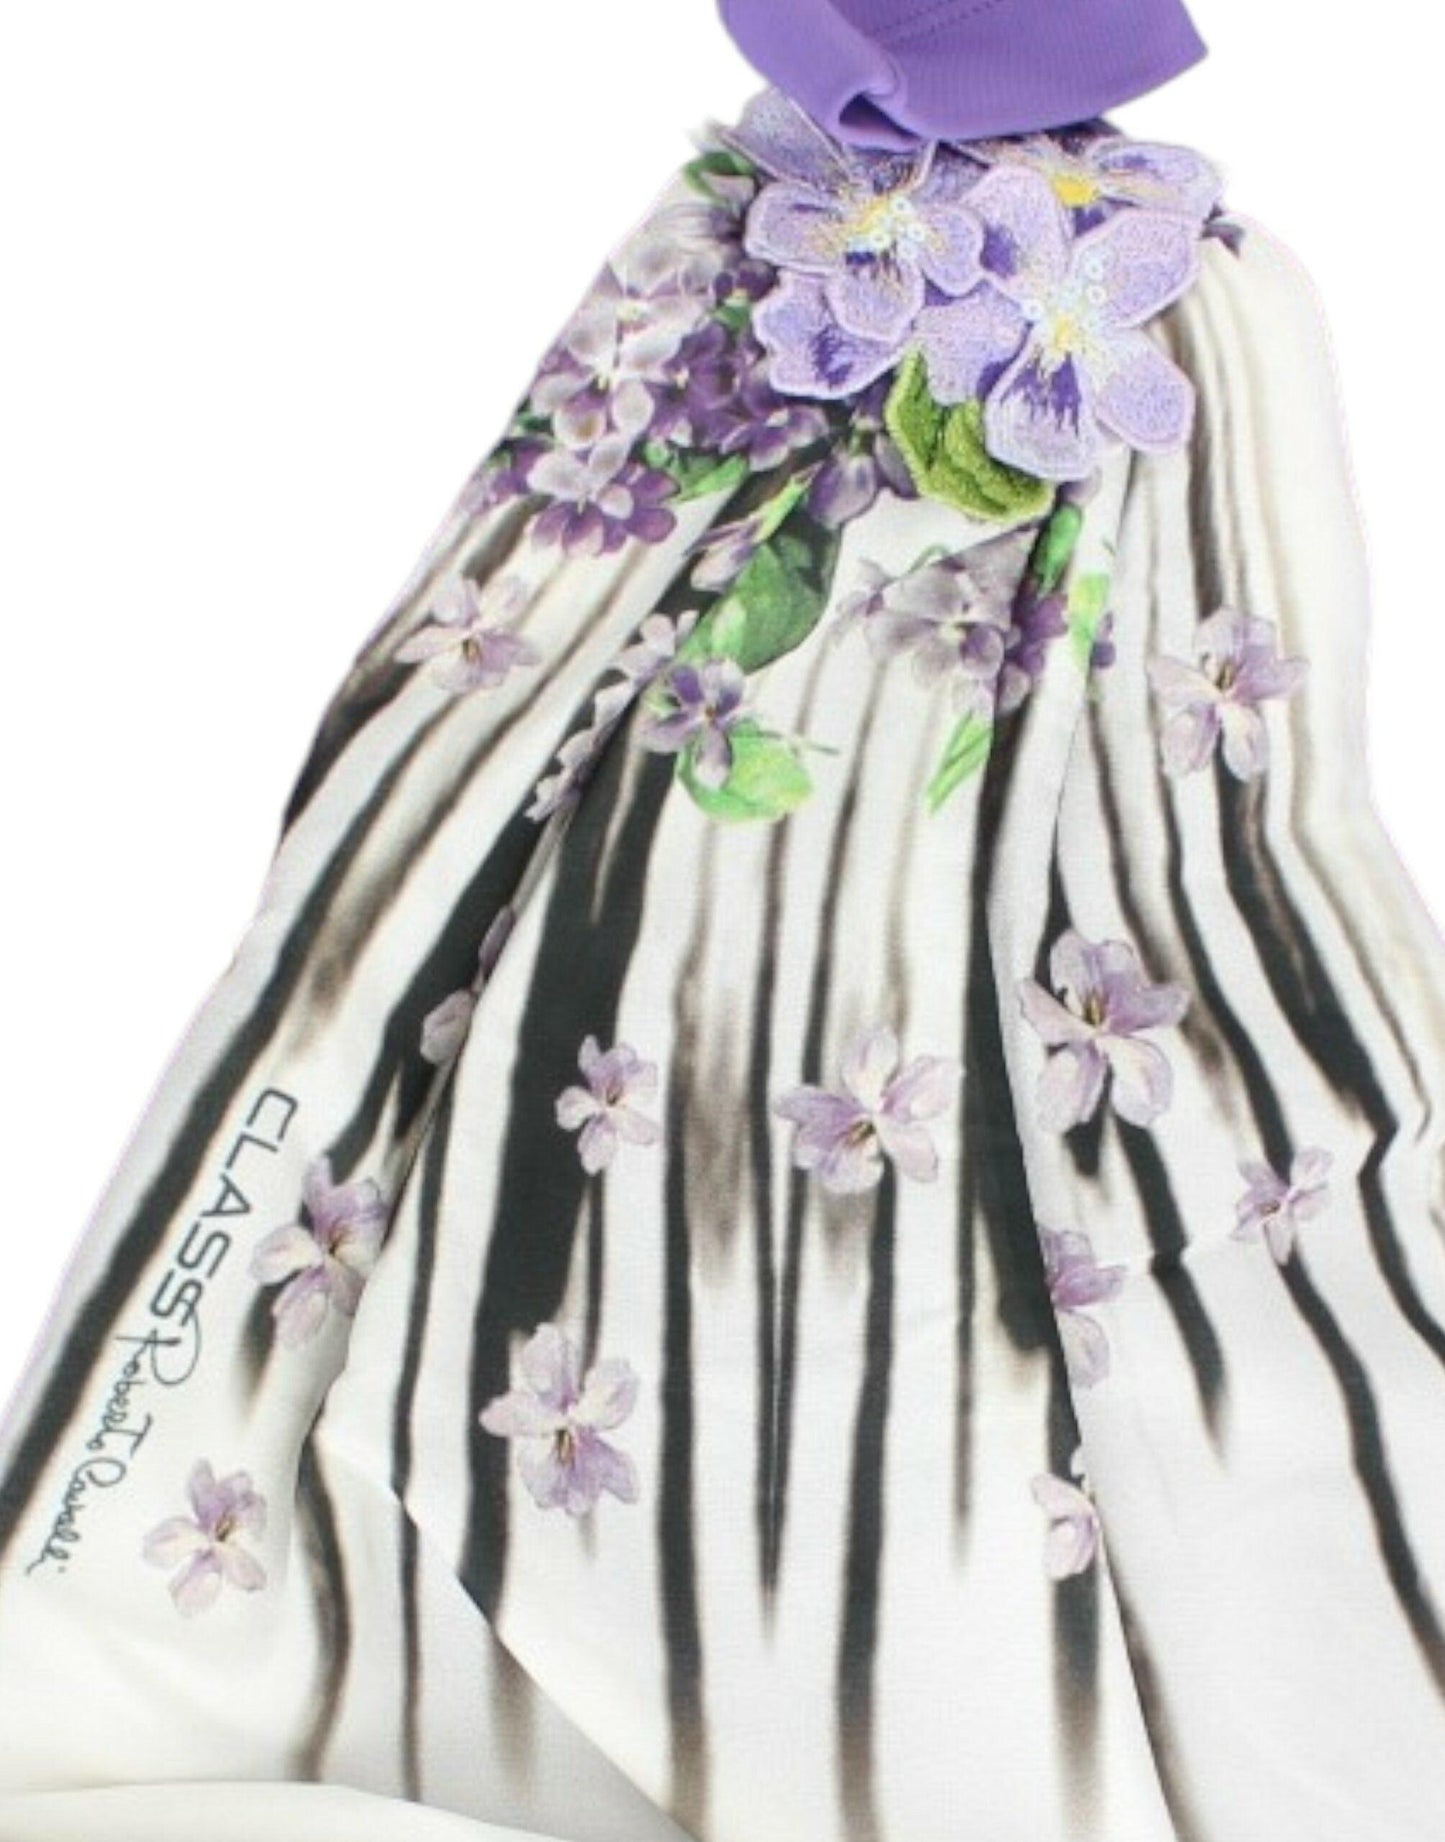 Cavalli Elegant Purple Floral Jersey Dress